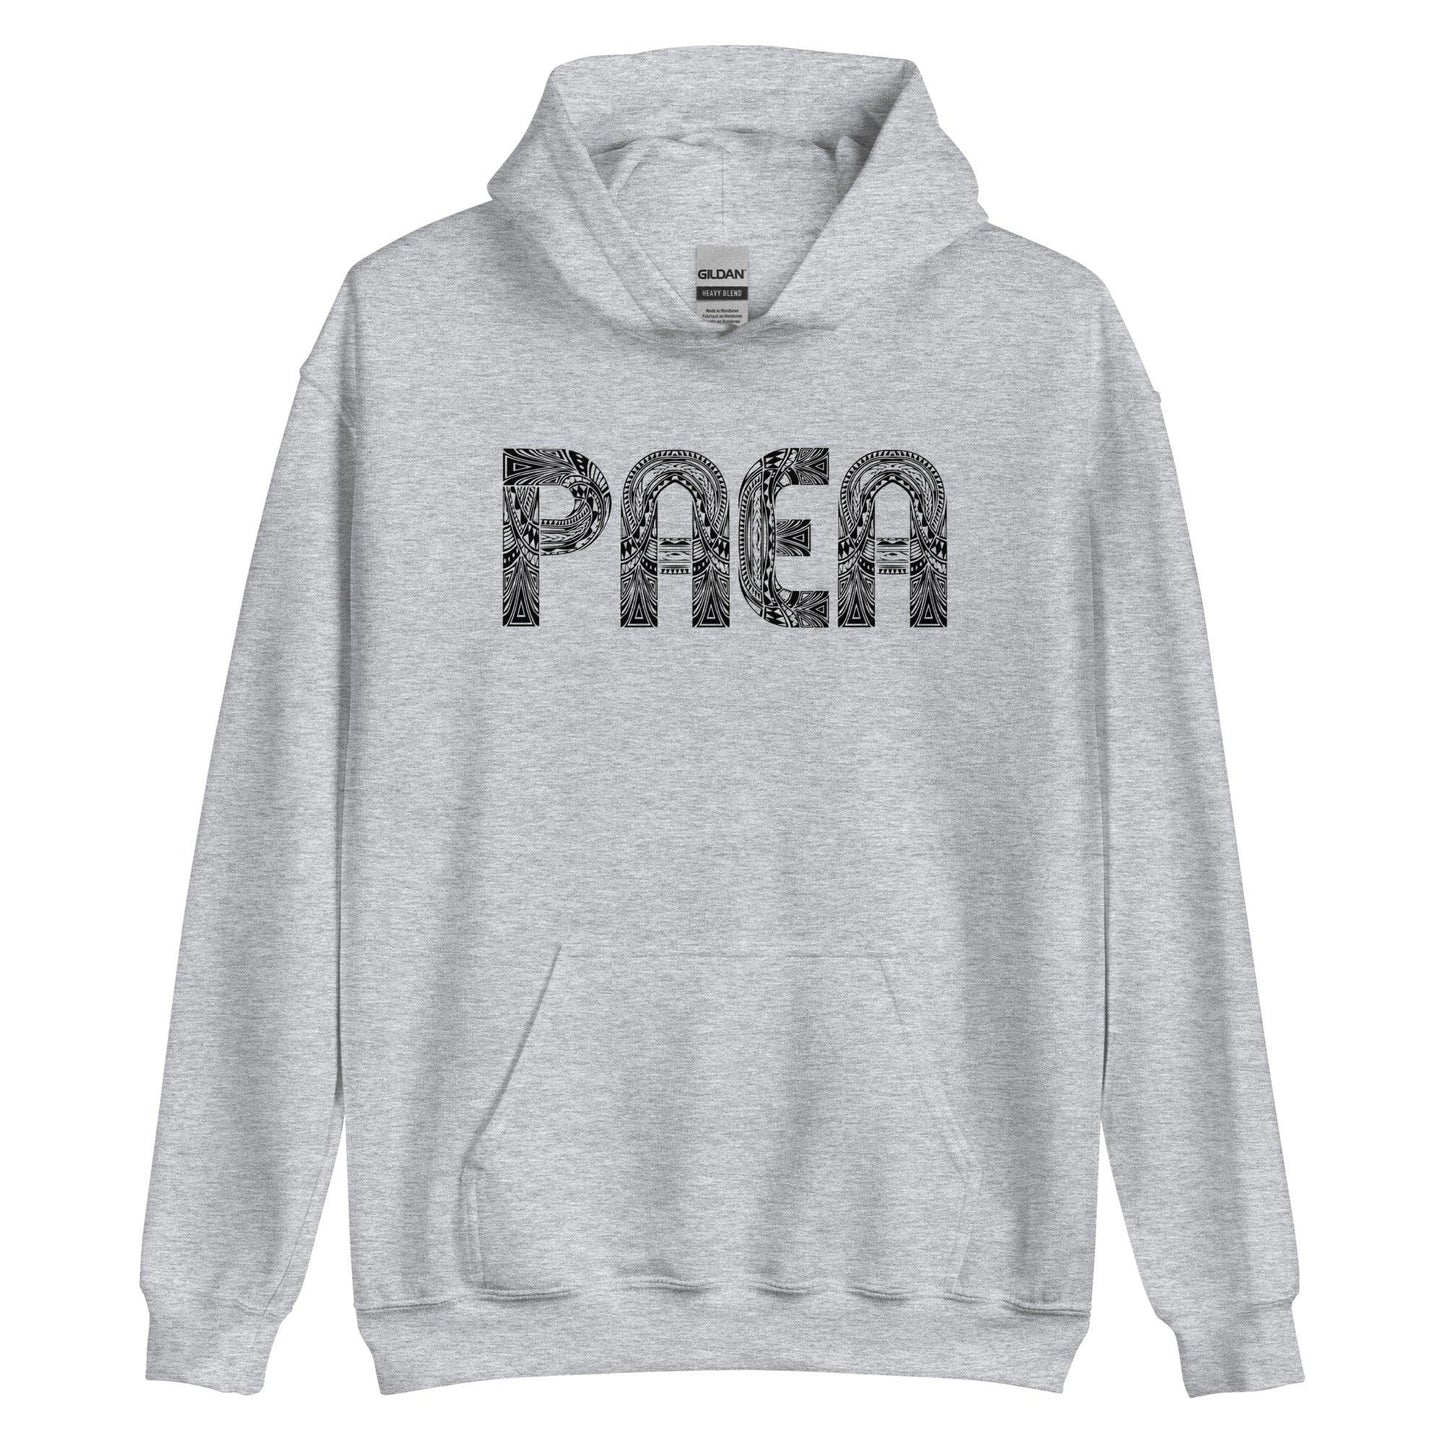 Phill Paea "Origins" Hoodie - Fan Arch